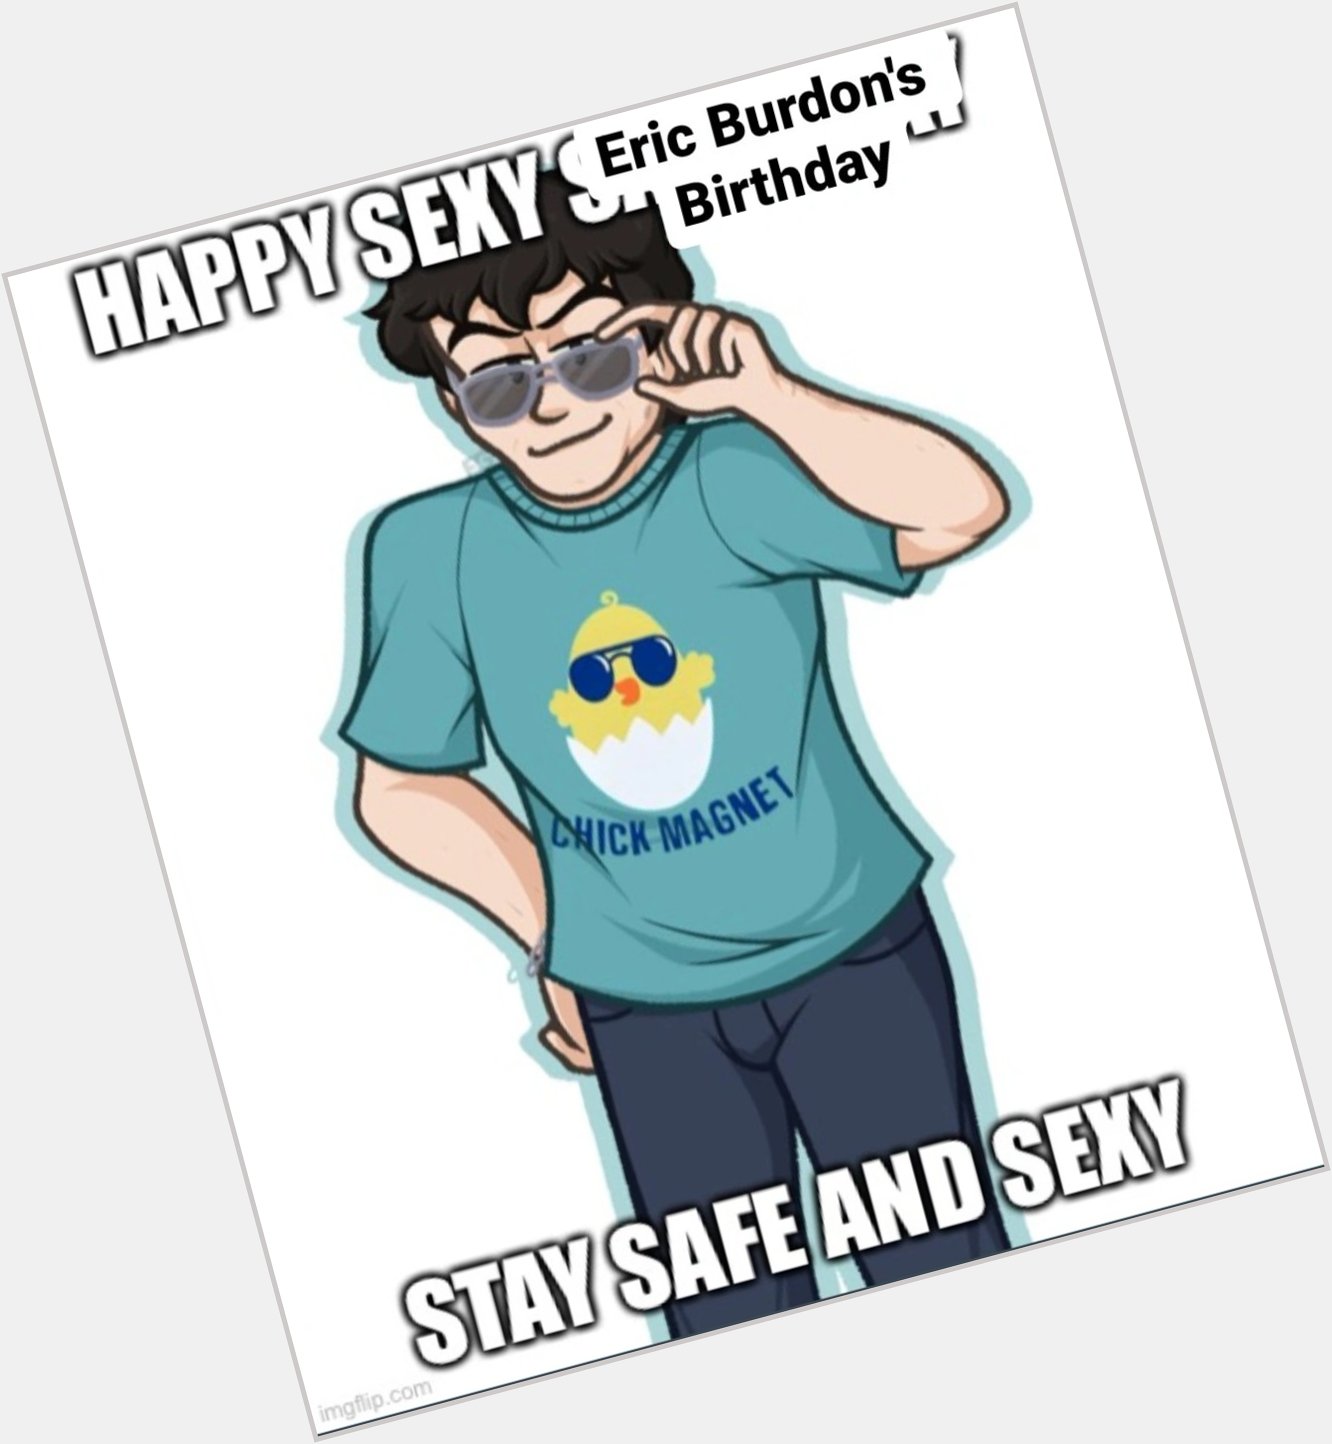 Happy Birthday, Eric Burdon!!  